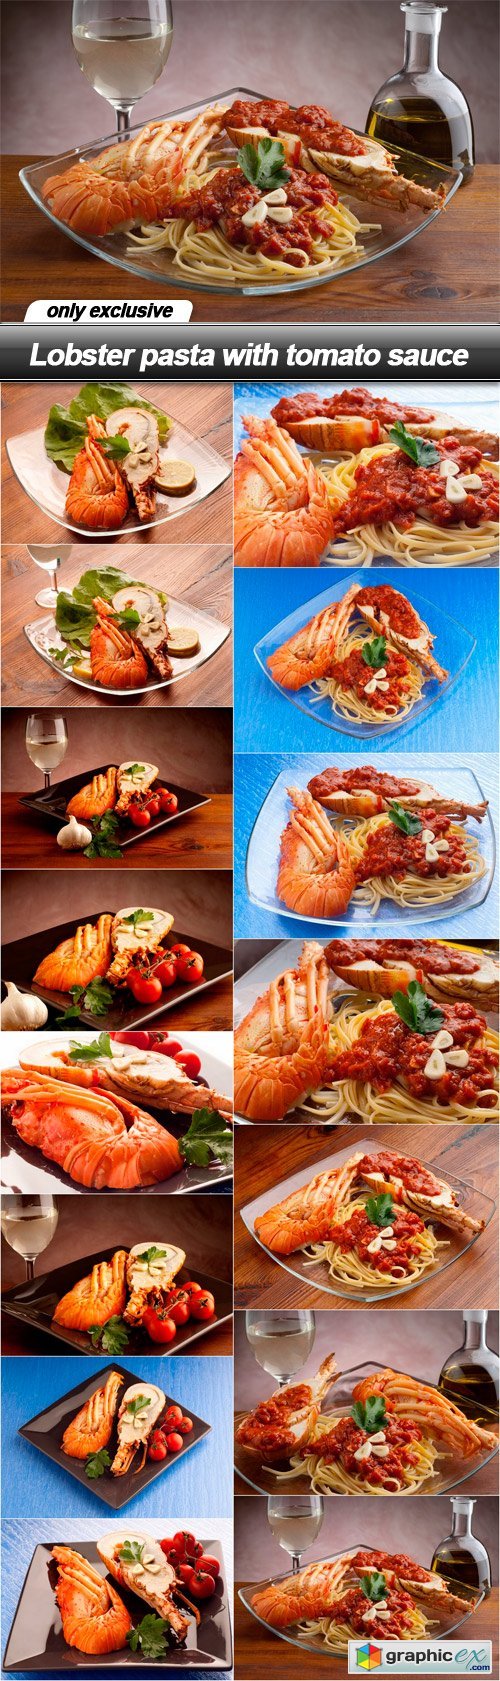 Lobster pasta with tomato sauce - 15 UHQ JPEG